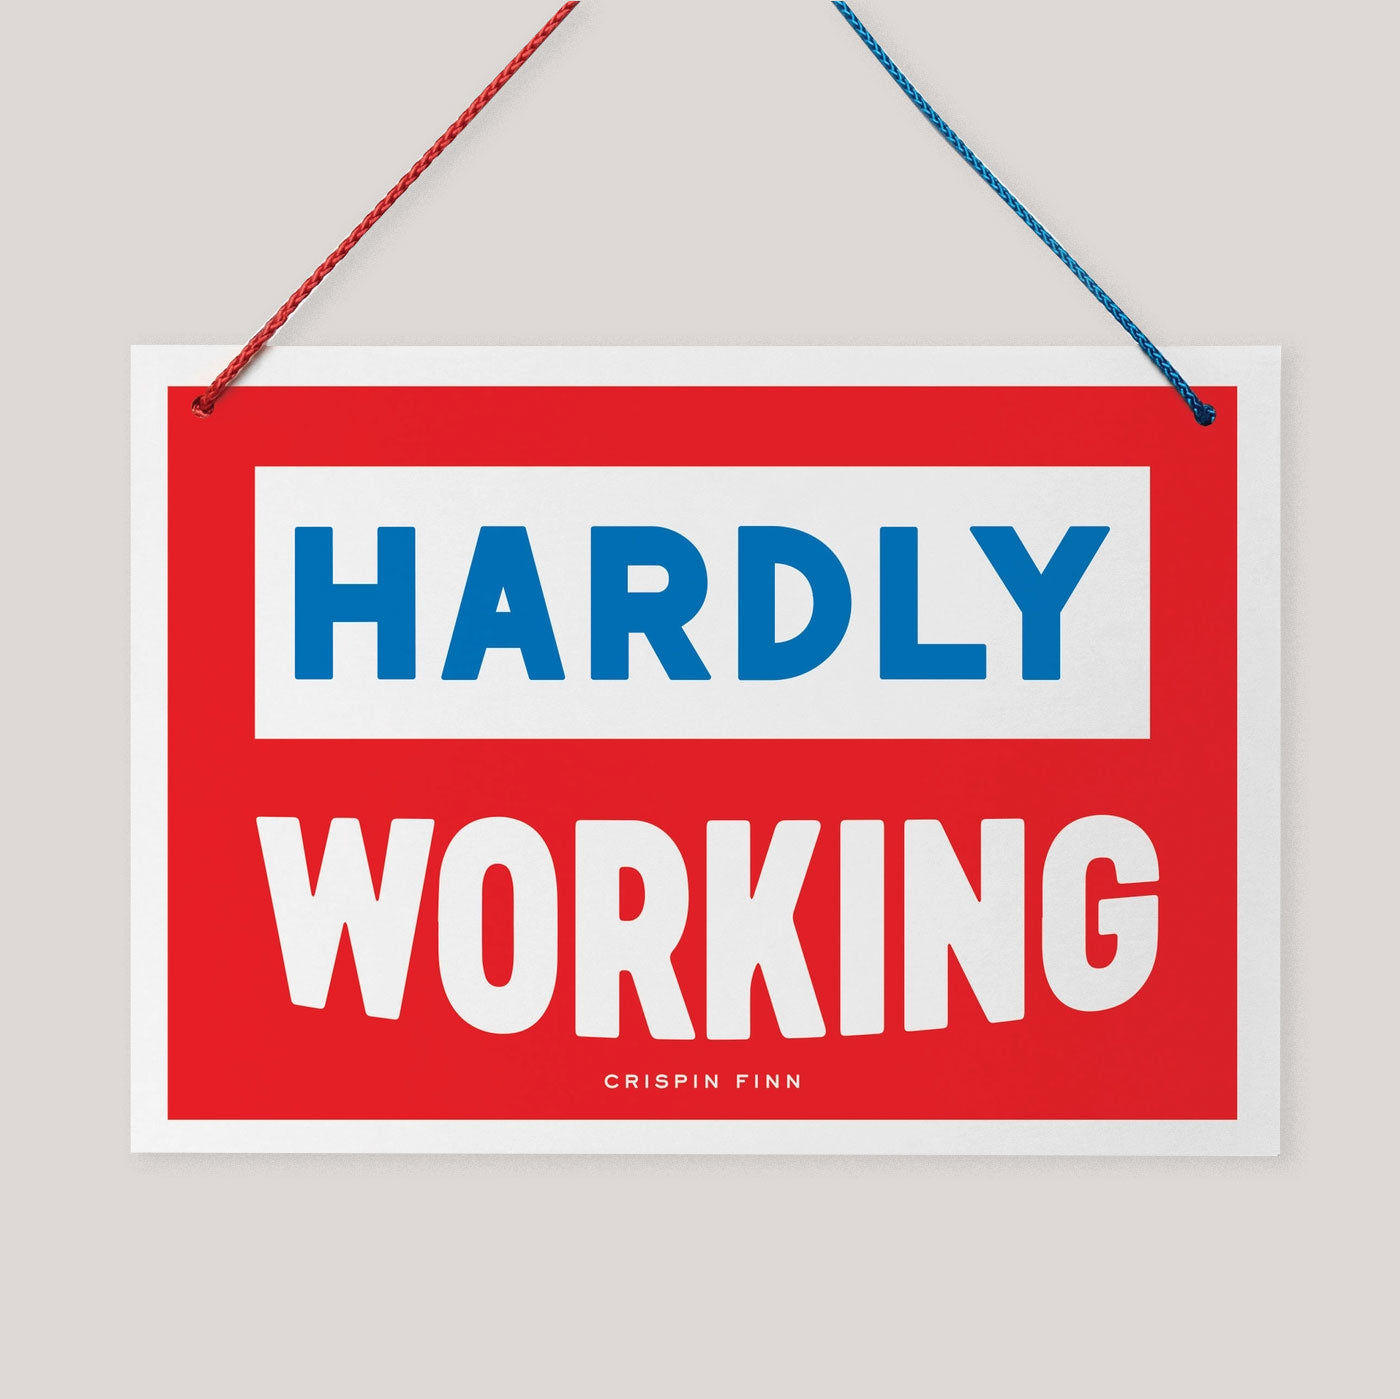 Woring Hard/Hardly Working Sign | Crispin Finn